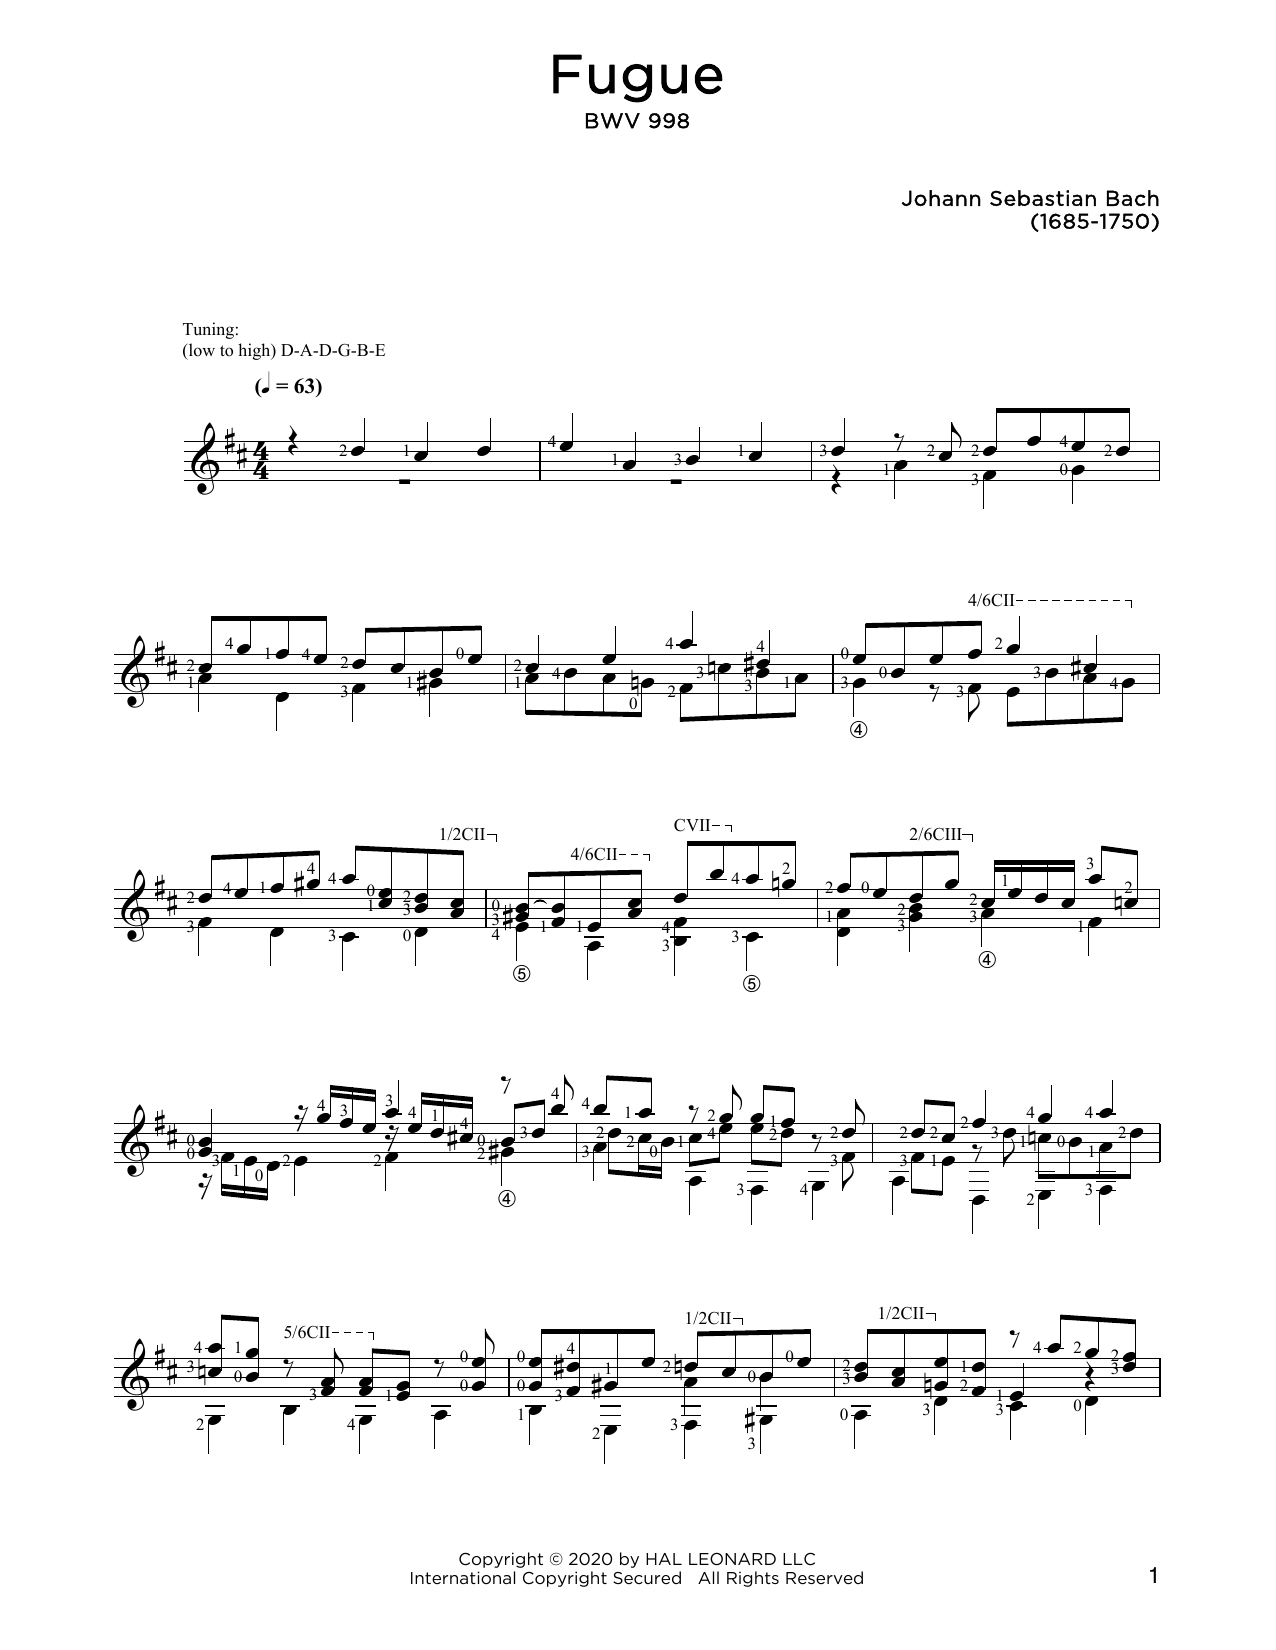 Johann Sebastian Bach Fugue In E-Flat Major, BWV 998 sheet music notes and chords arranged for Solo Guitar